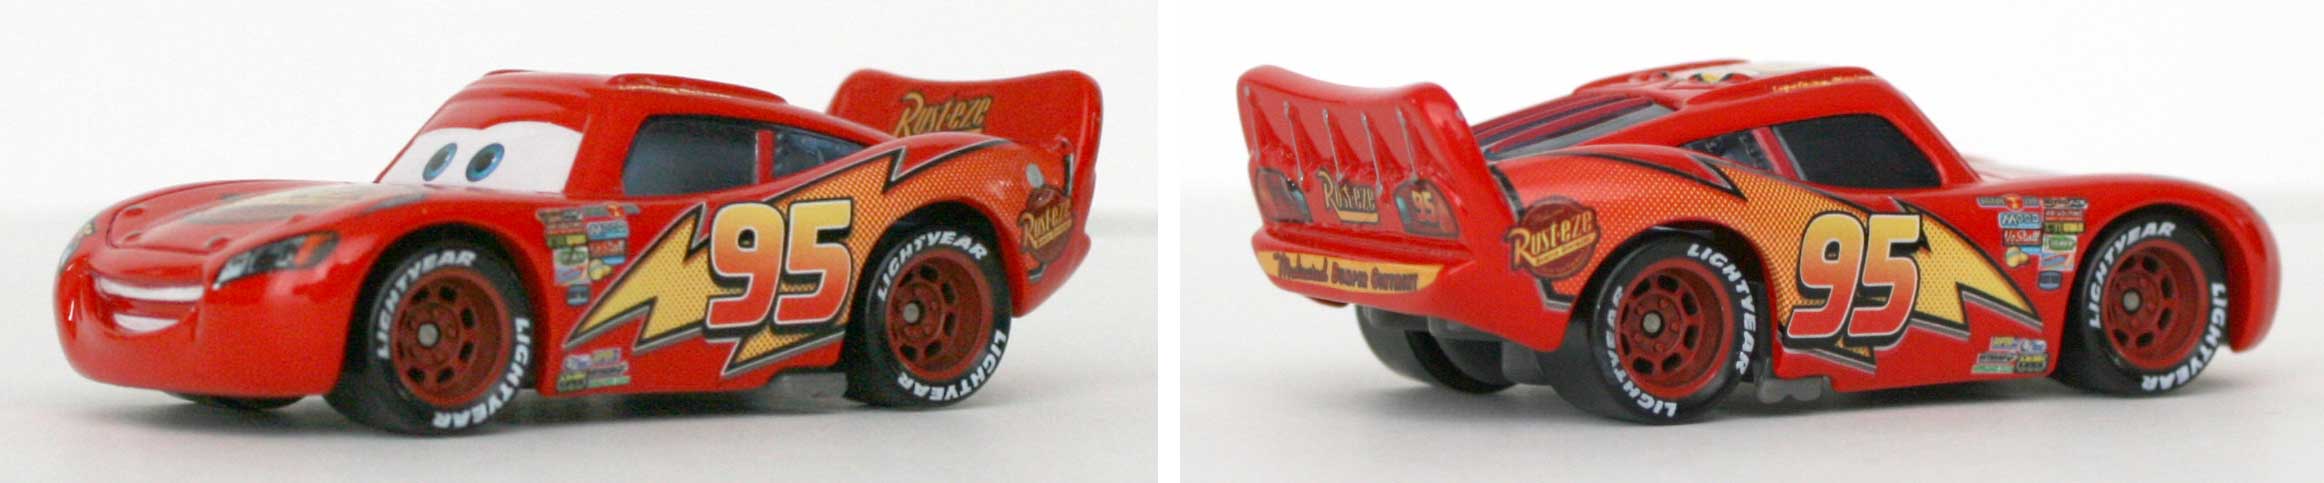 Mattel : Race O Rama - Orange N°001 - Flash McQueen